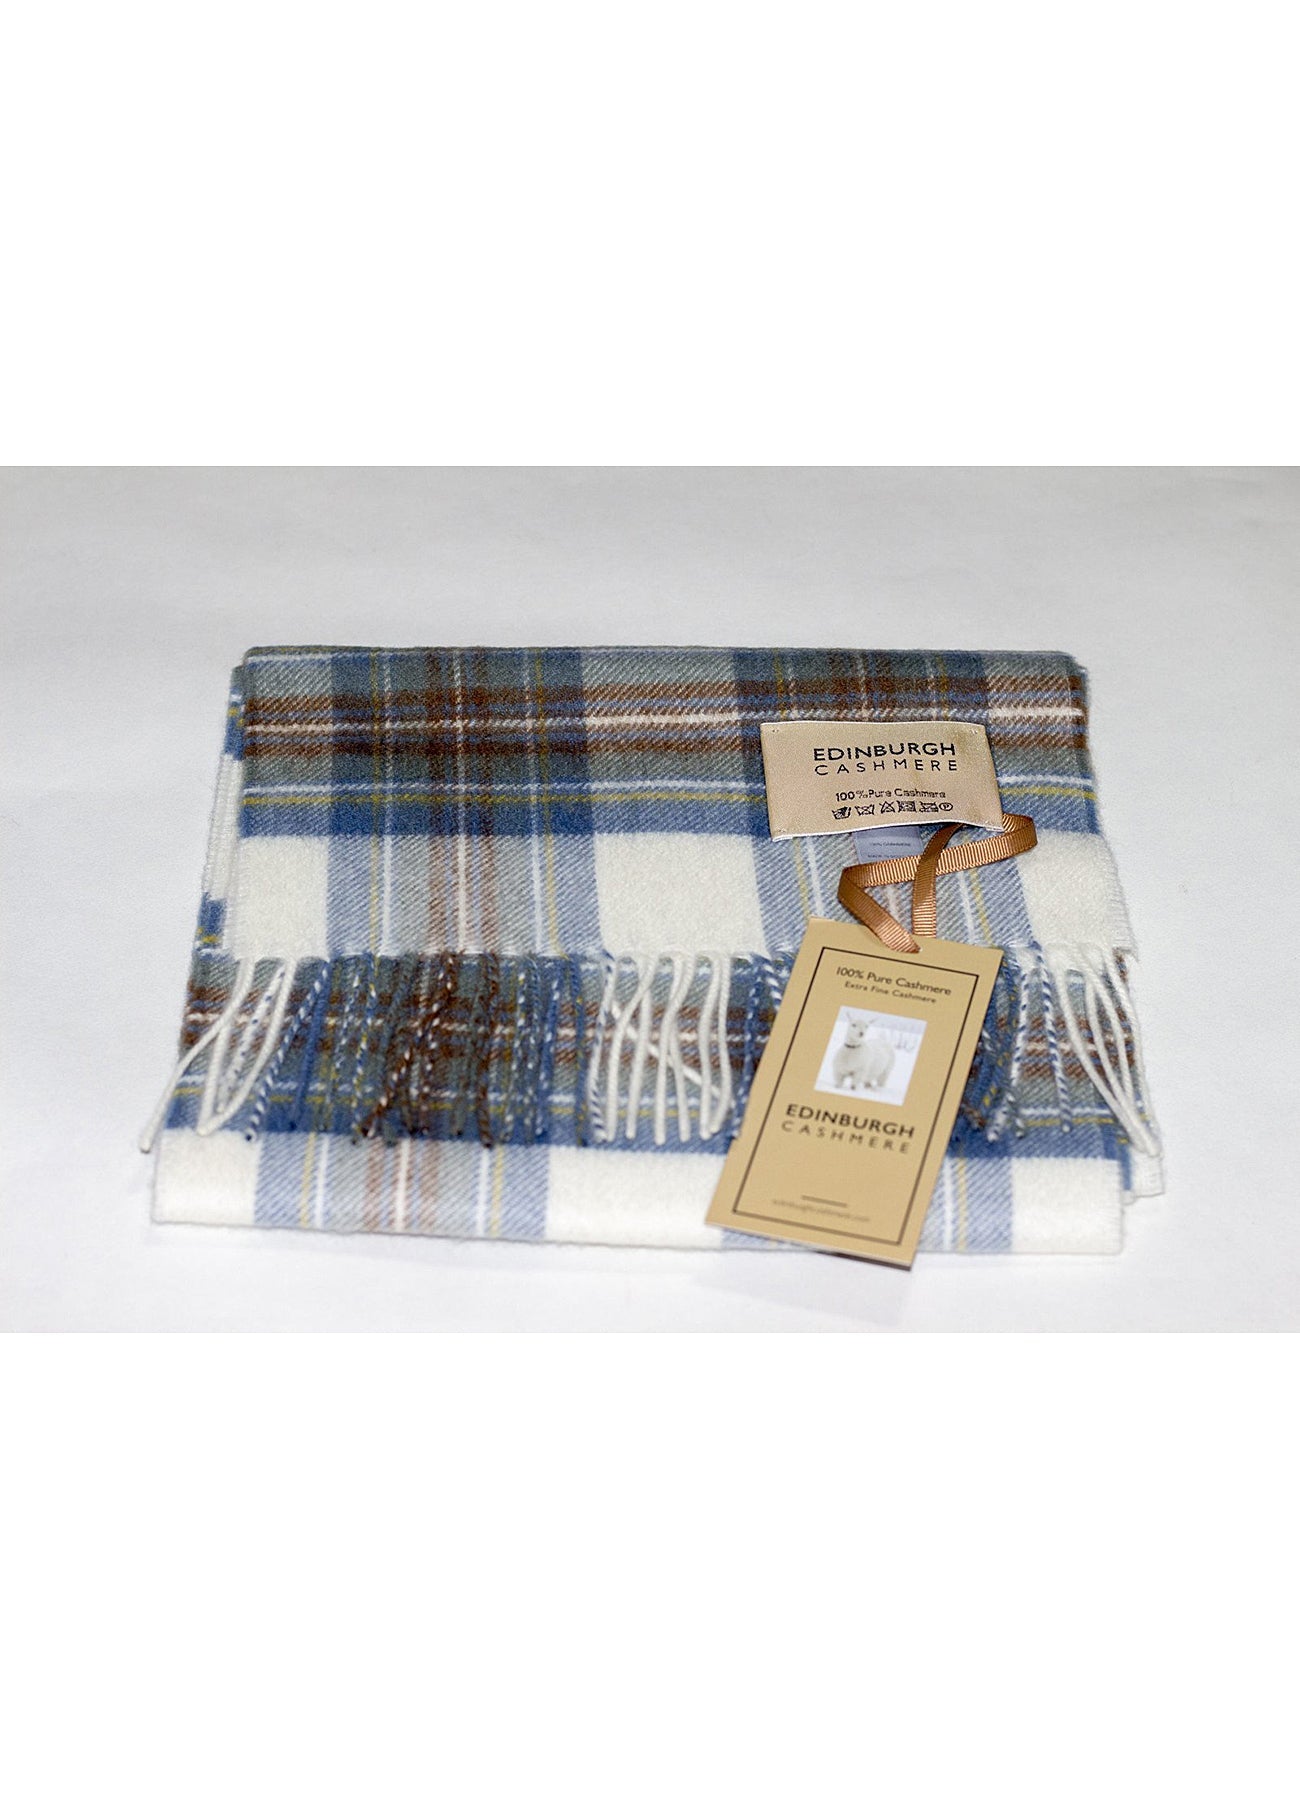 Stewart ミュートブルー - スコットランド製スカーフ 100% ピュア カシミア